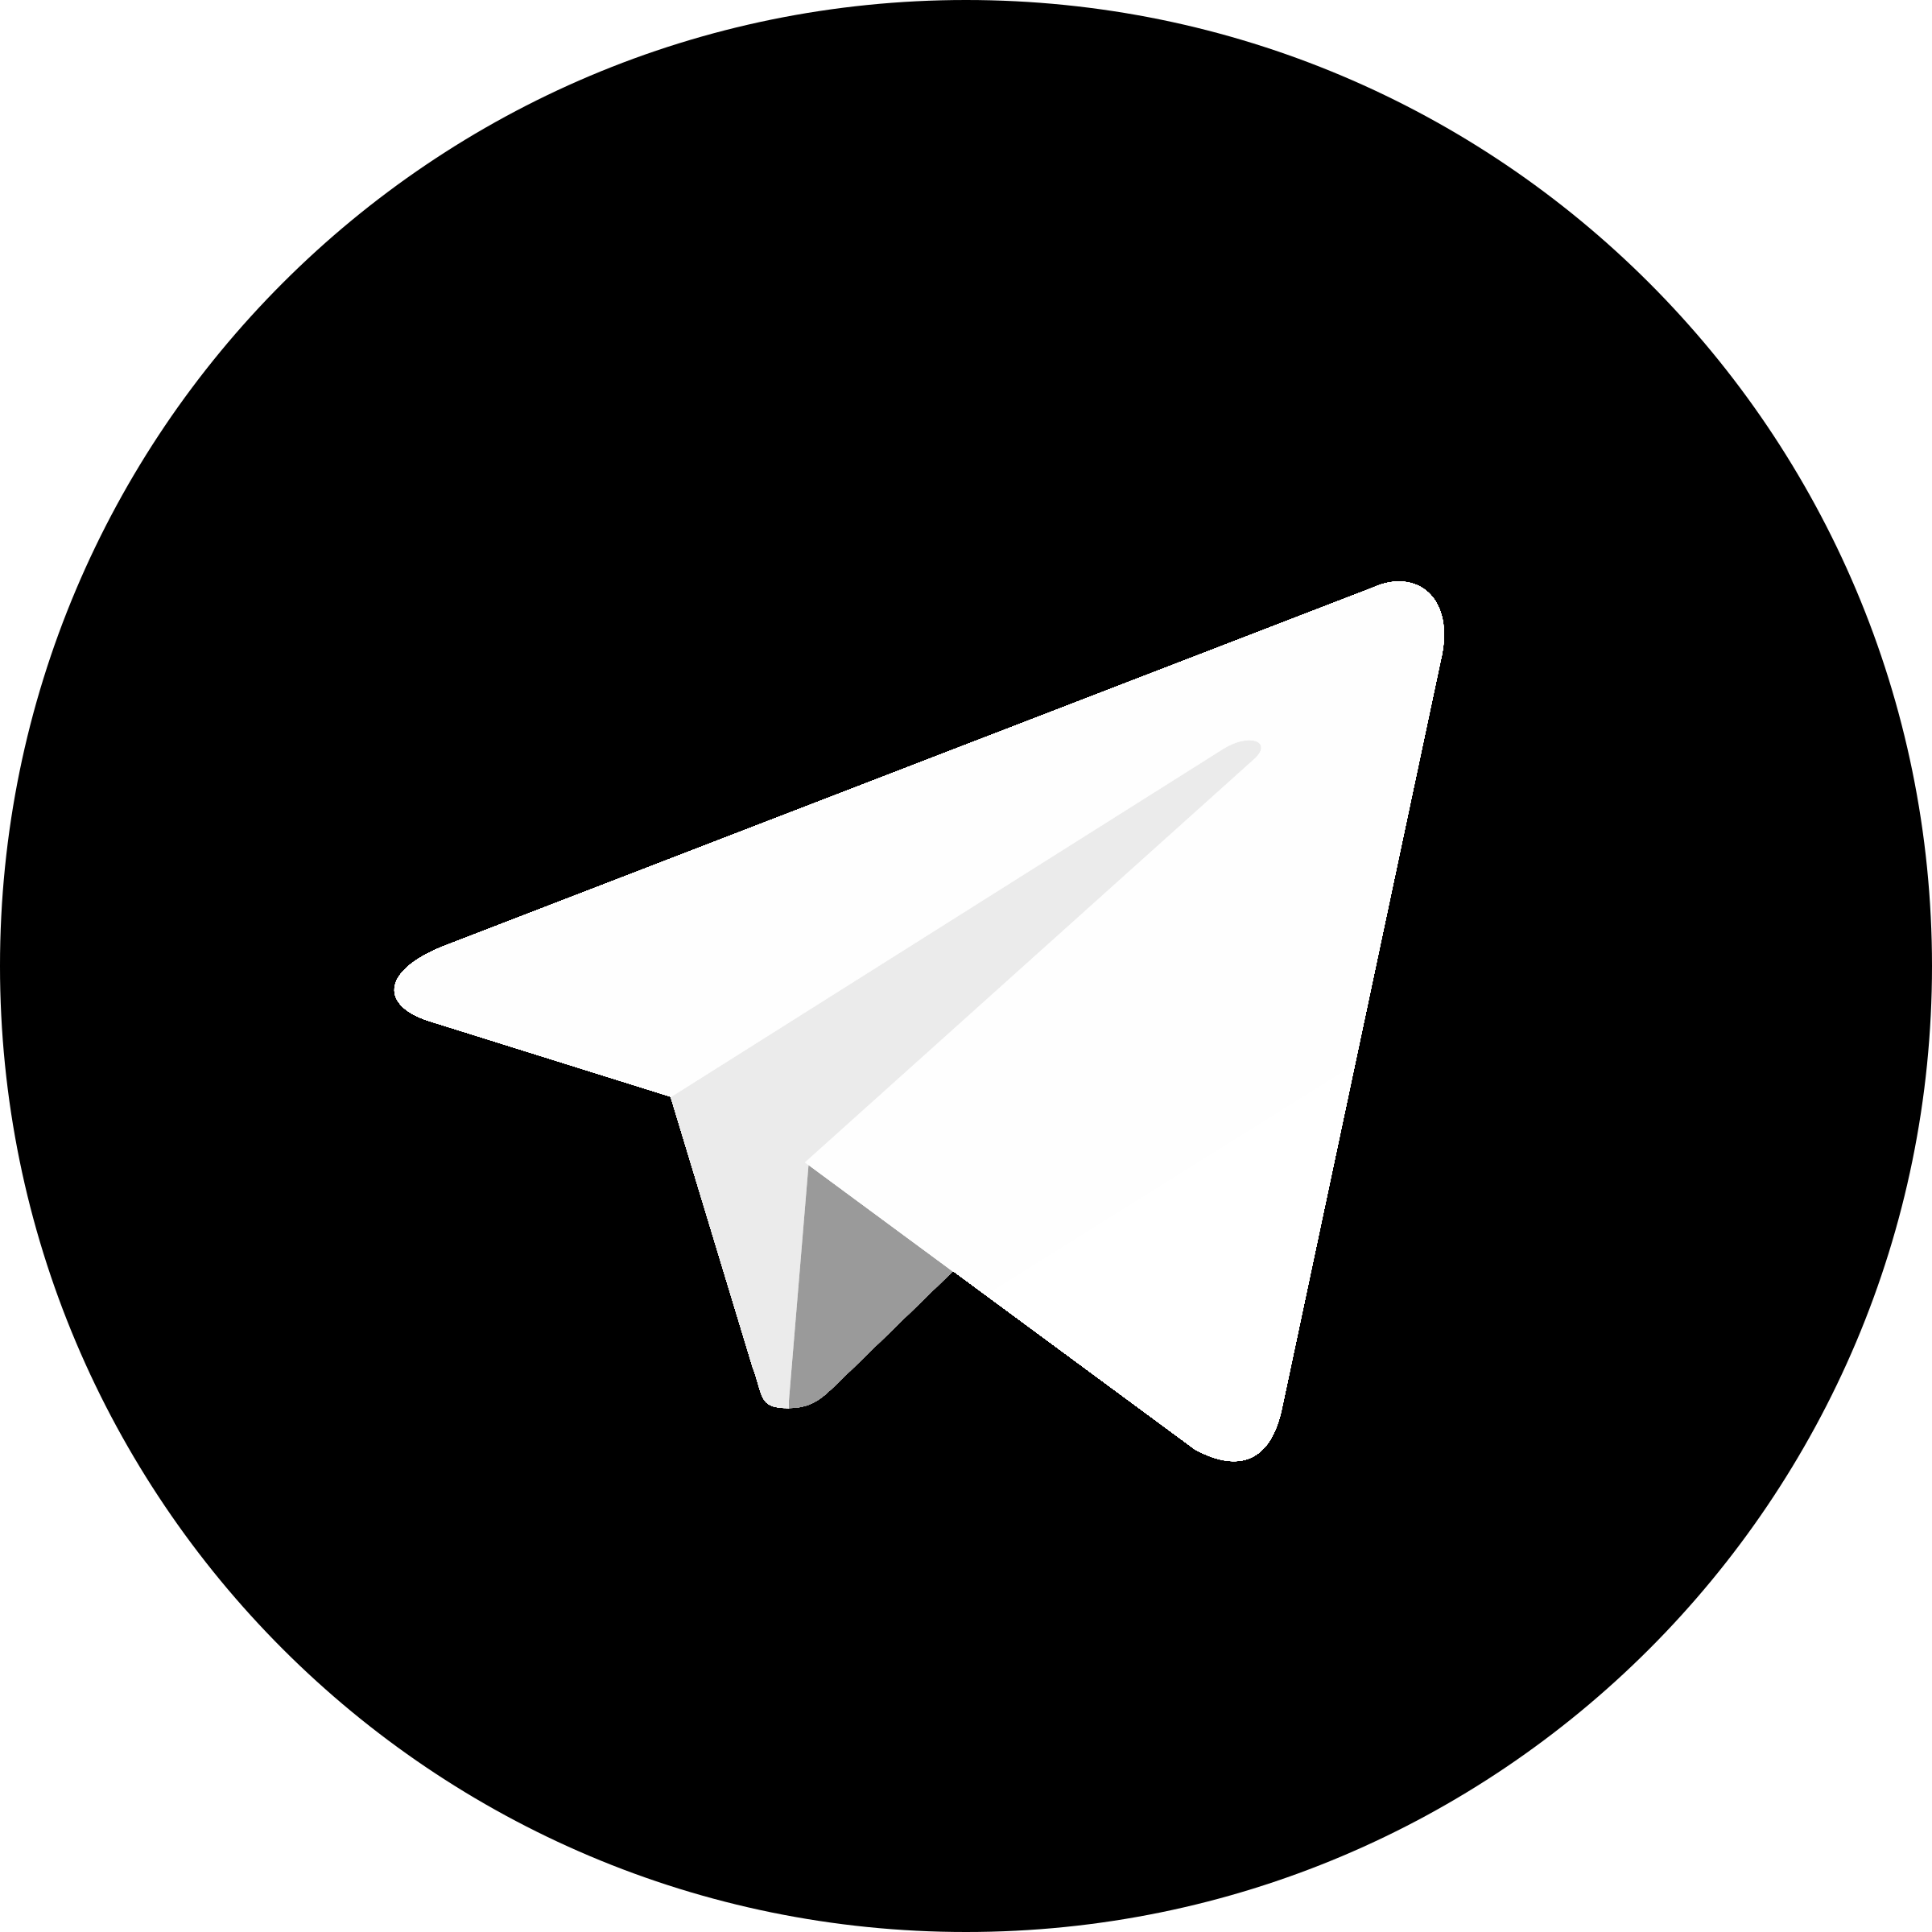 telegram-logo-black-and-white.png